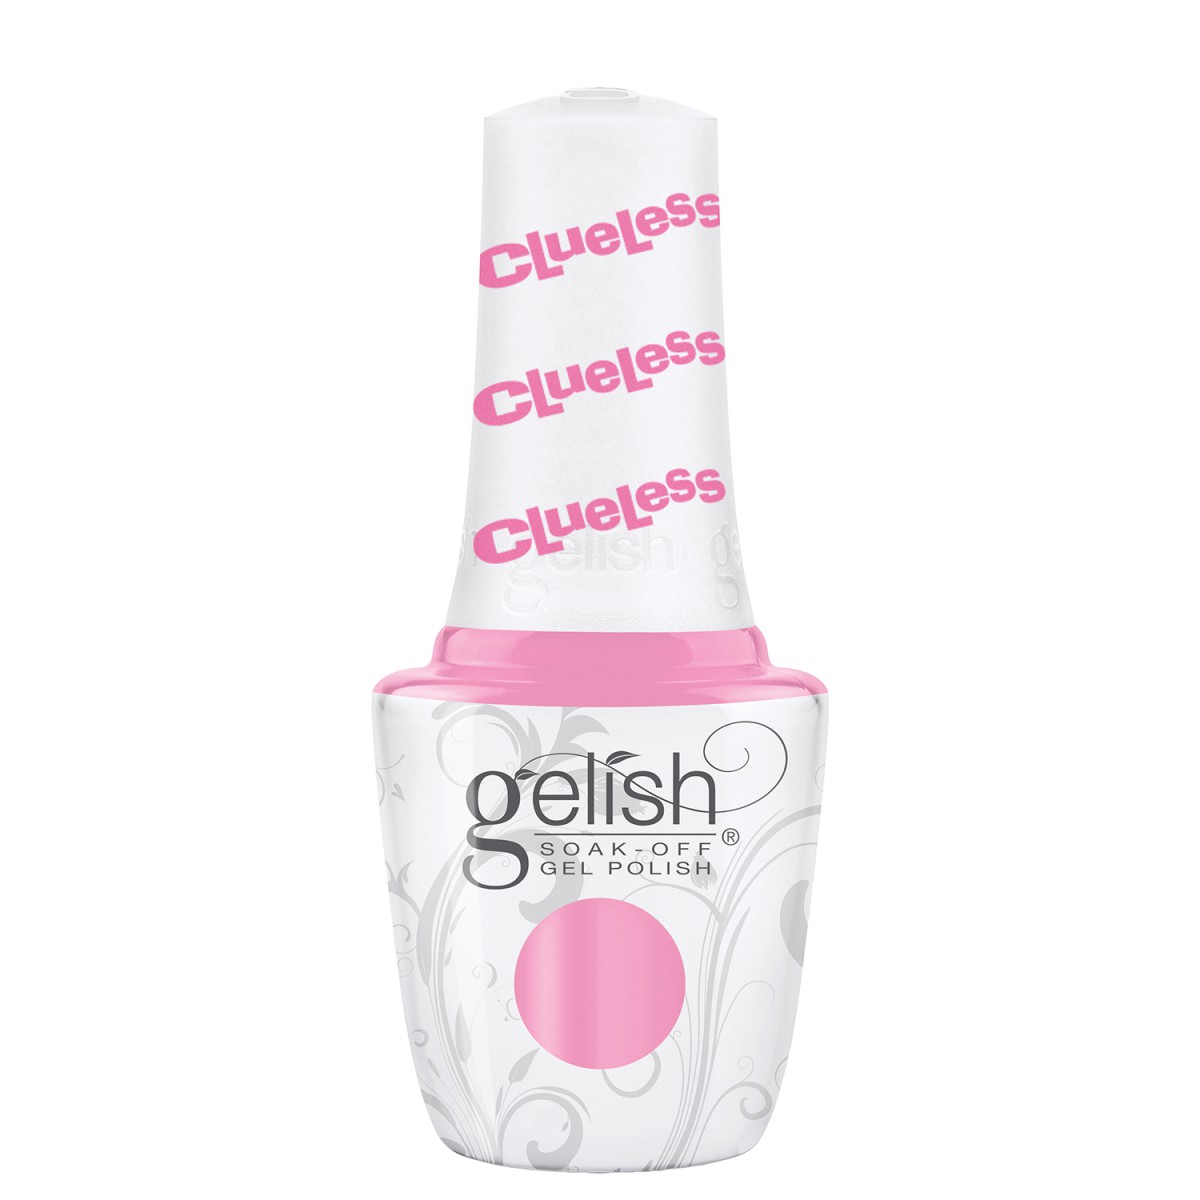 Gelish Adorably clueless 15 ml